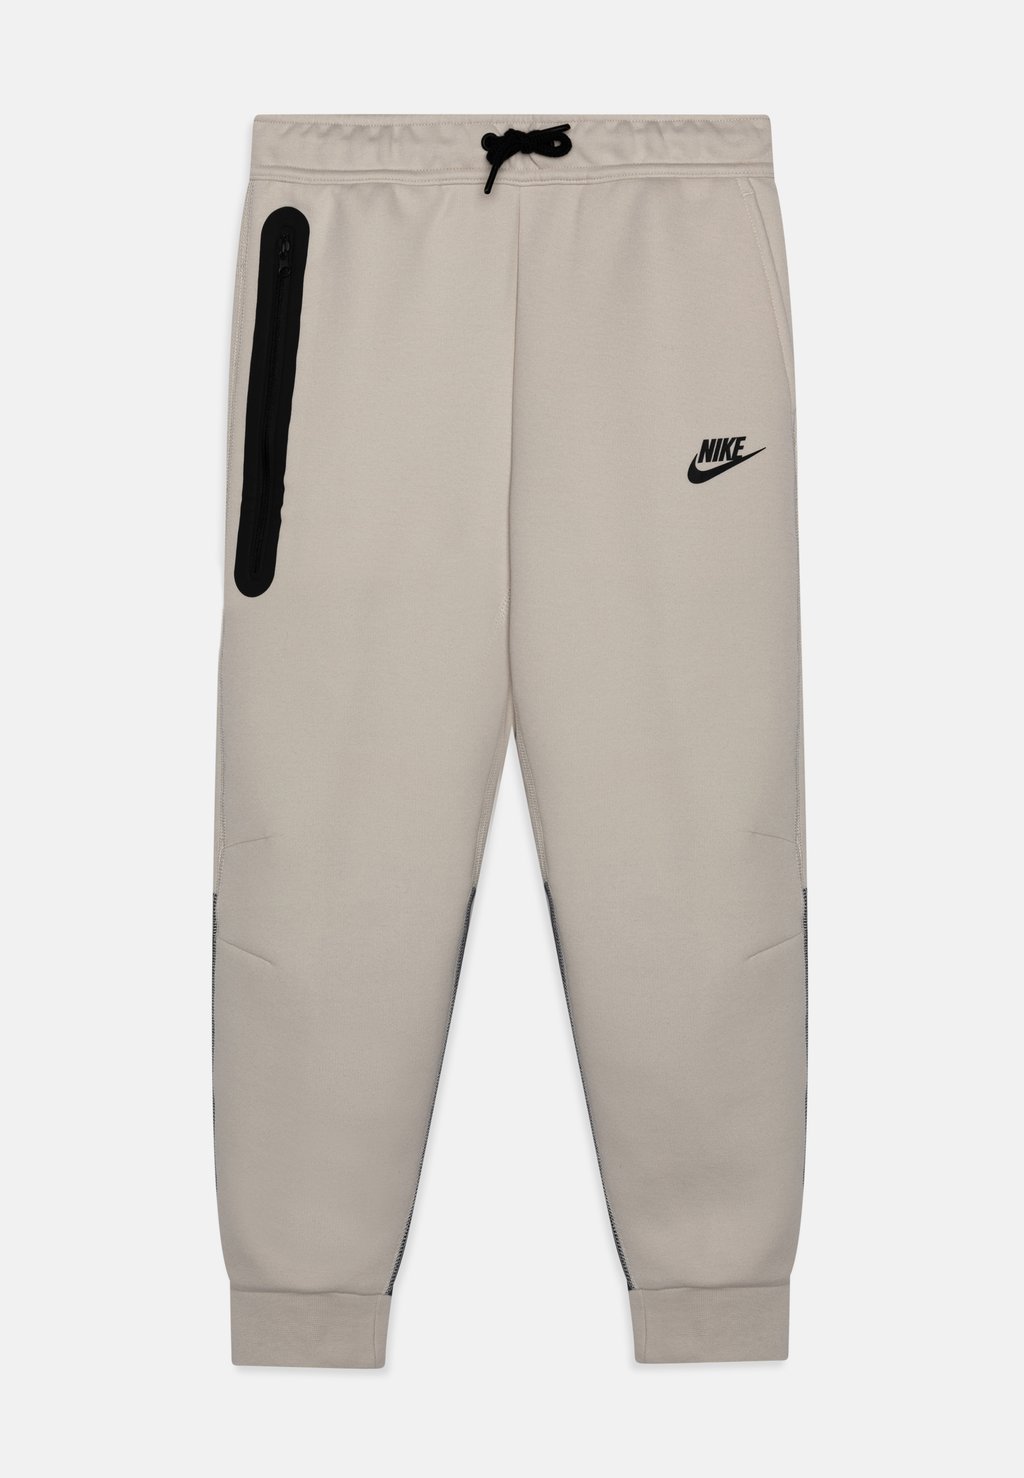 Брюки для бега TECH Nike Sportswear, цвет light bone/dark grey/black сандалии logo zirk 1 kappa цвет black grey light red dark